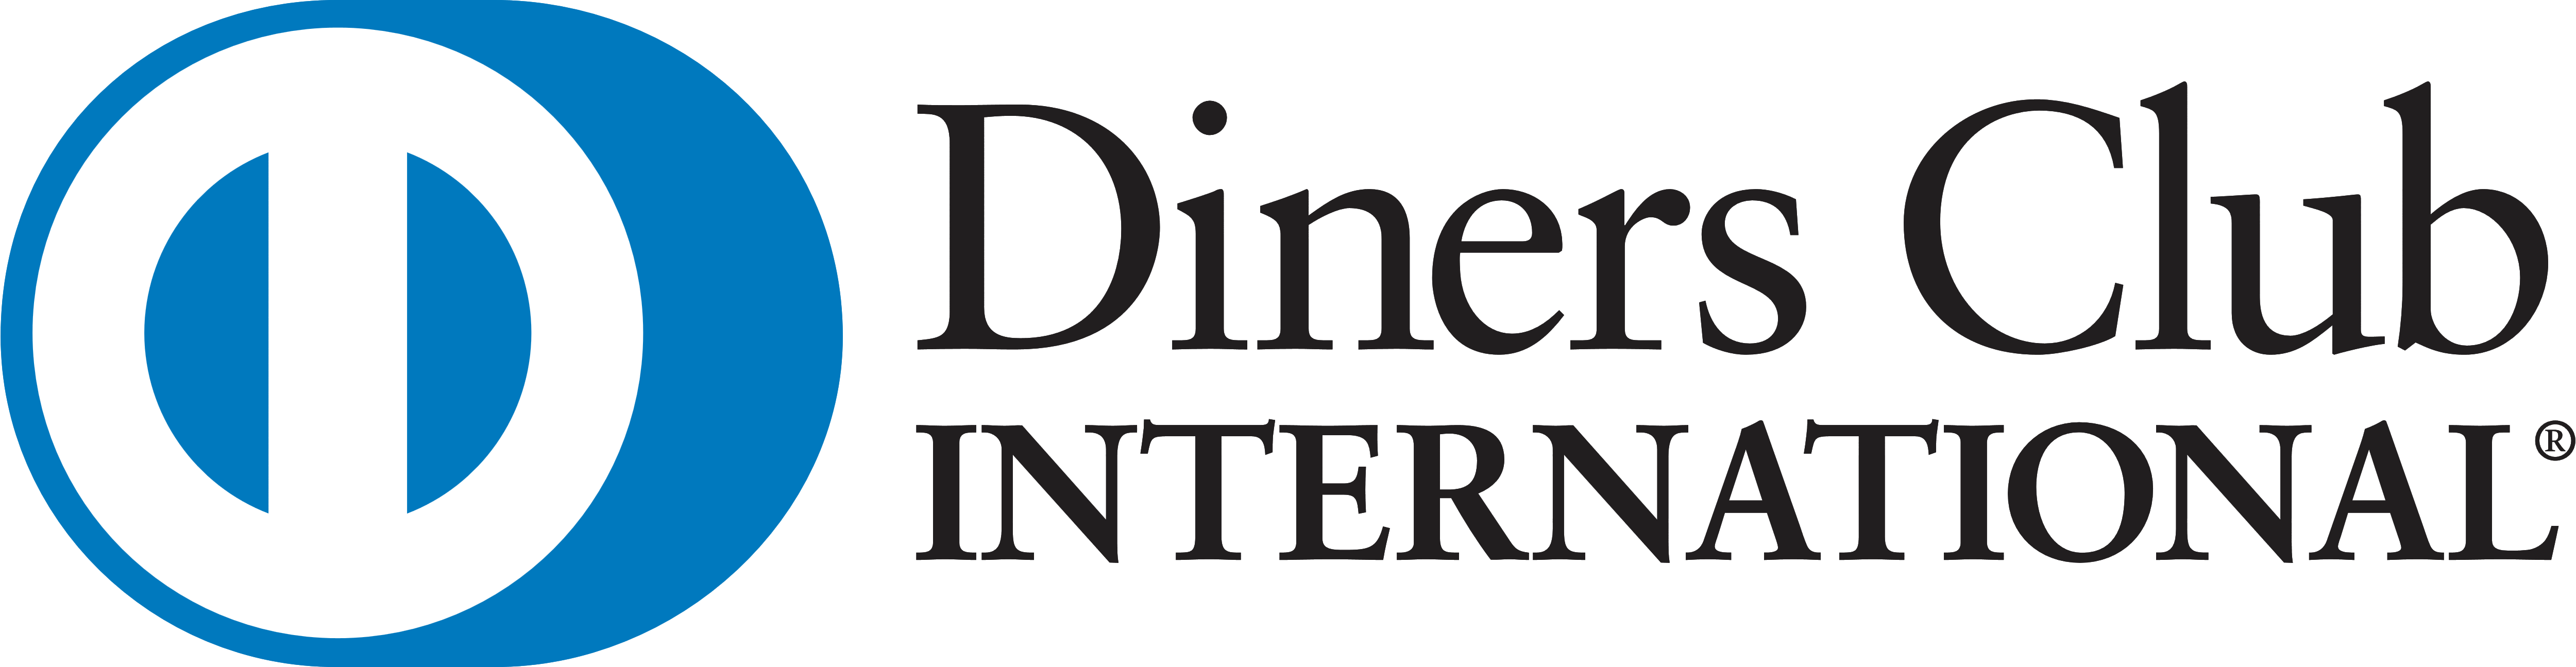 Diners club. Diners Club International. Diners Club International logo. Diners Club платежная система.